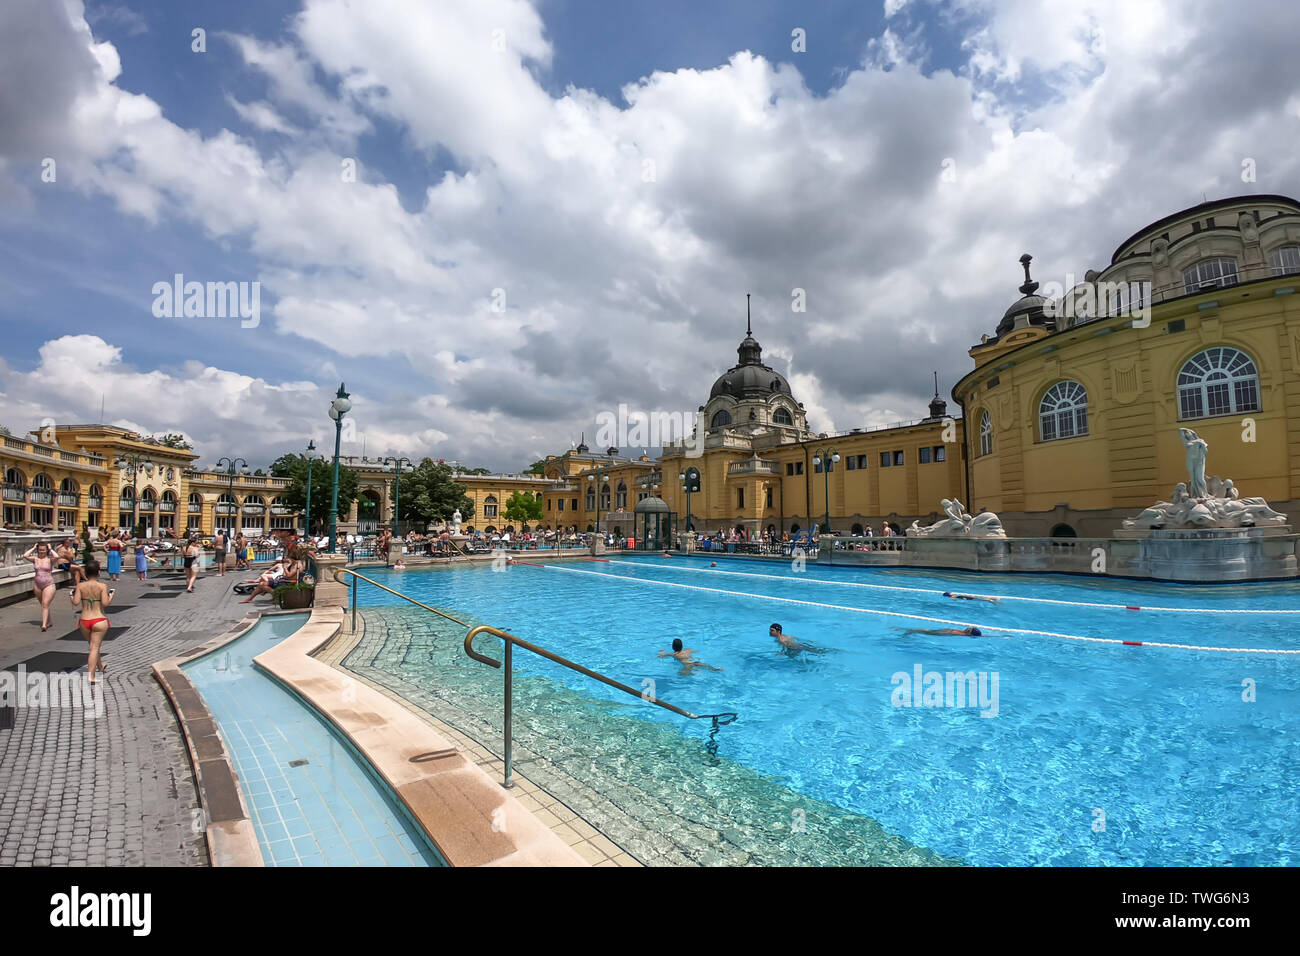 Szechenyi Baths in Budapest, Thermal Bath - open air thermal bath complex in Budapest. Hungary Stock Photo